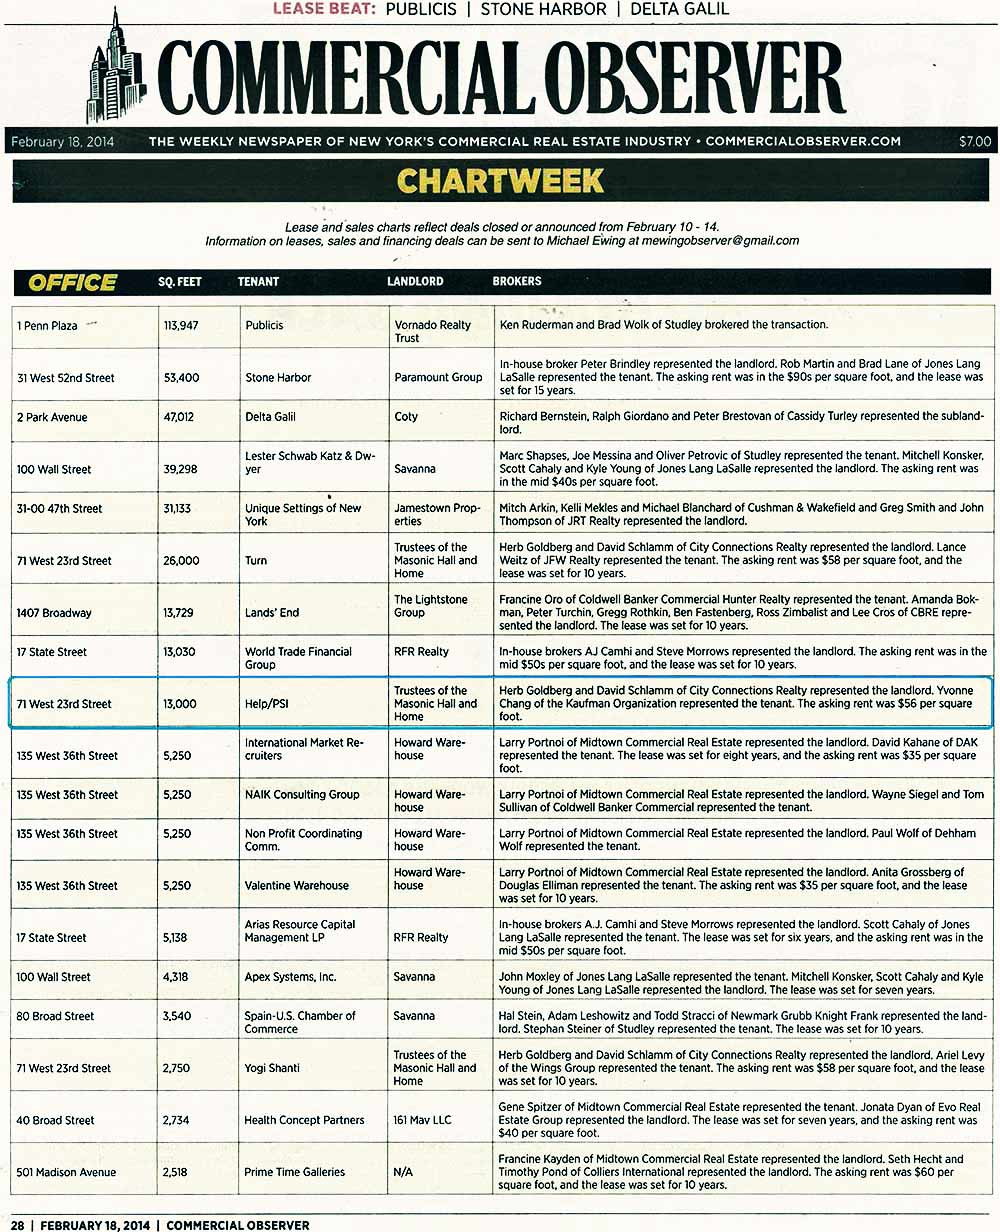 Commercial-Observer-2.18.2014-Help-PSI-(Chartweek)